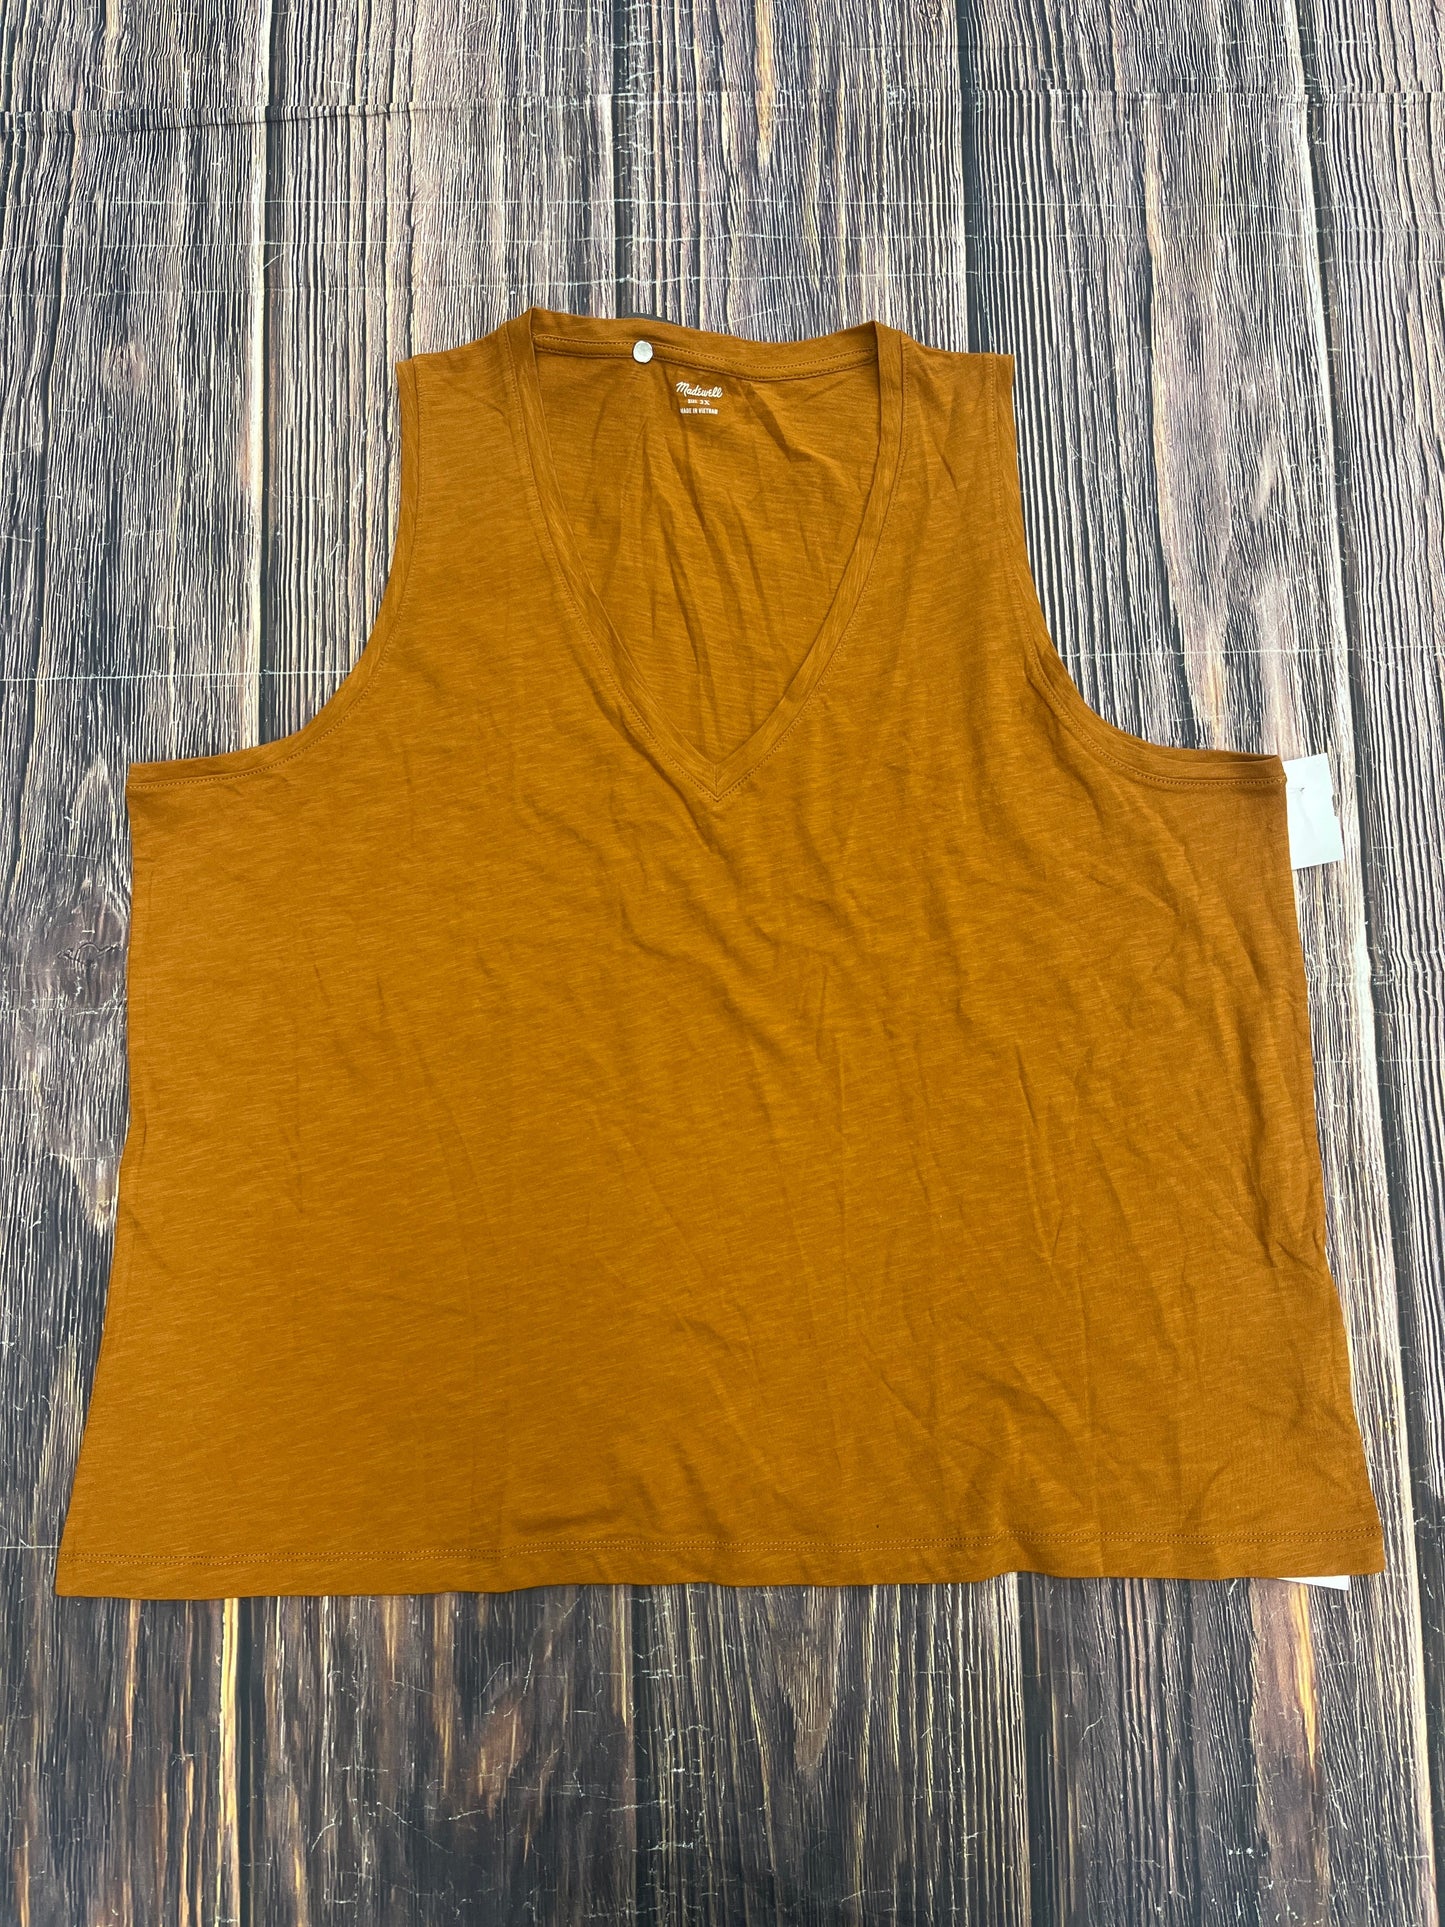 Orange Top Sleeveless Madewell, Size 3x